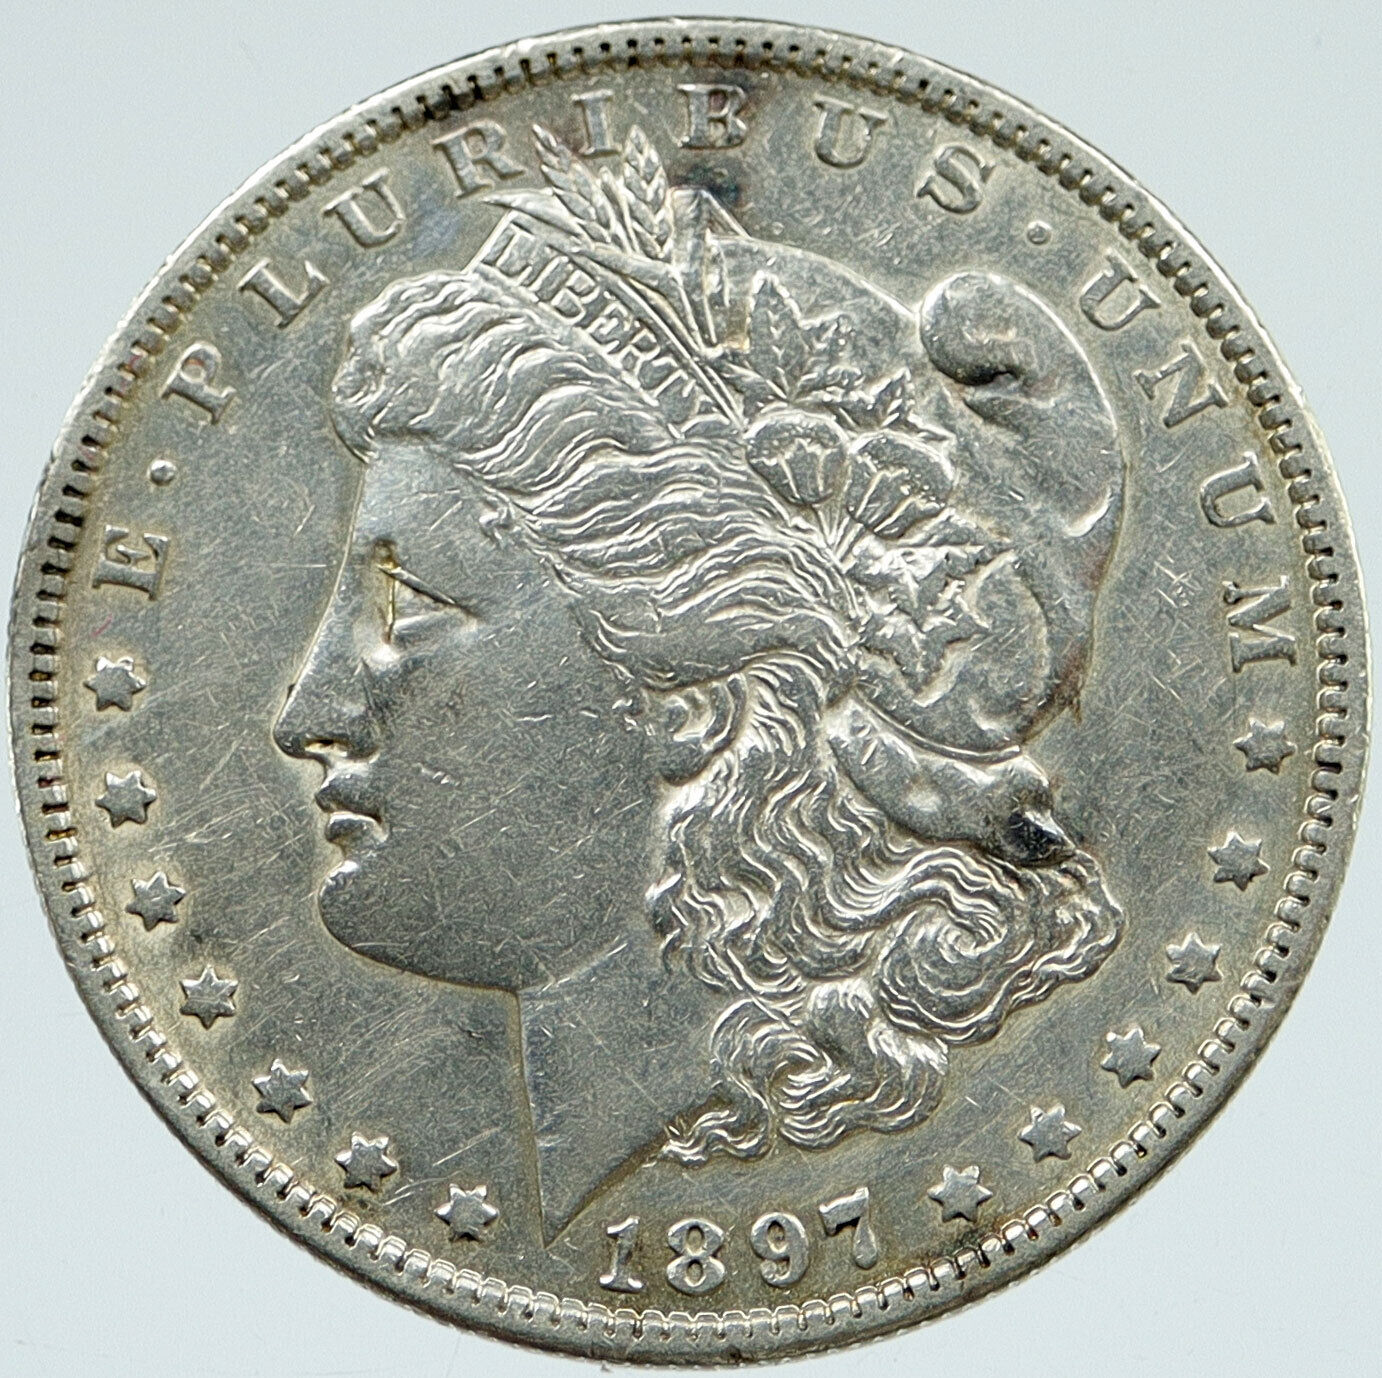 1897 O UNITED STATES of America EAGLE Old US Silver Morgan Dollar Coin i117136